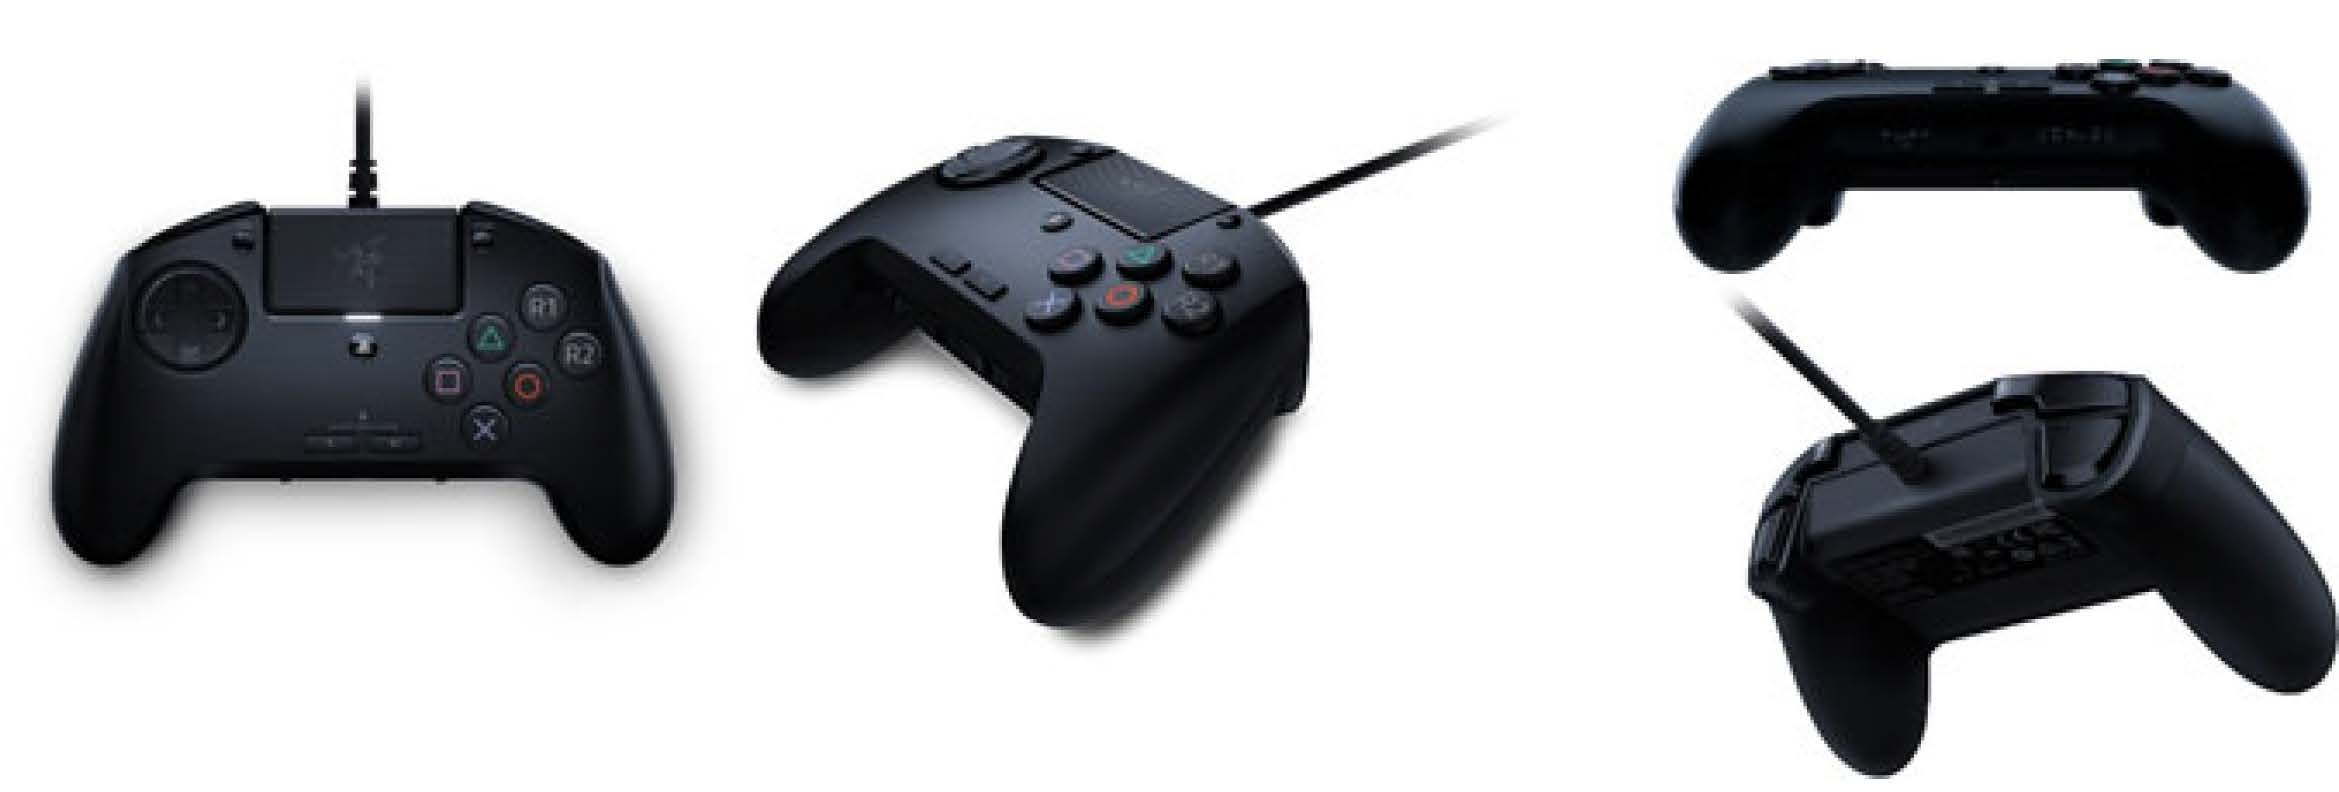 Razer 格闘ゲーム向けゲームパッド型コントローラー Raion Fightpad For Playstation R 4を11月29日 金 より国内発売開始 Razerのプレスリリース